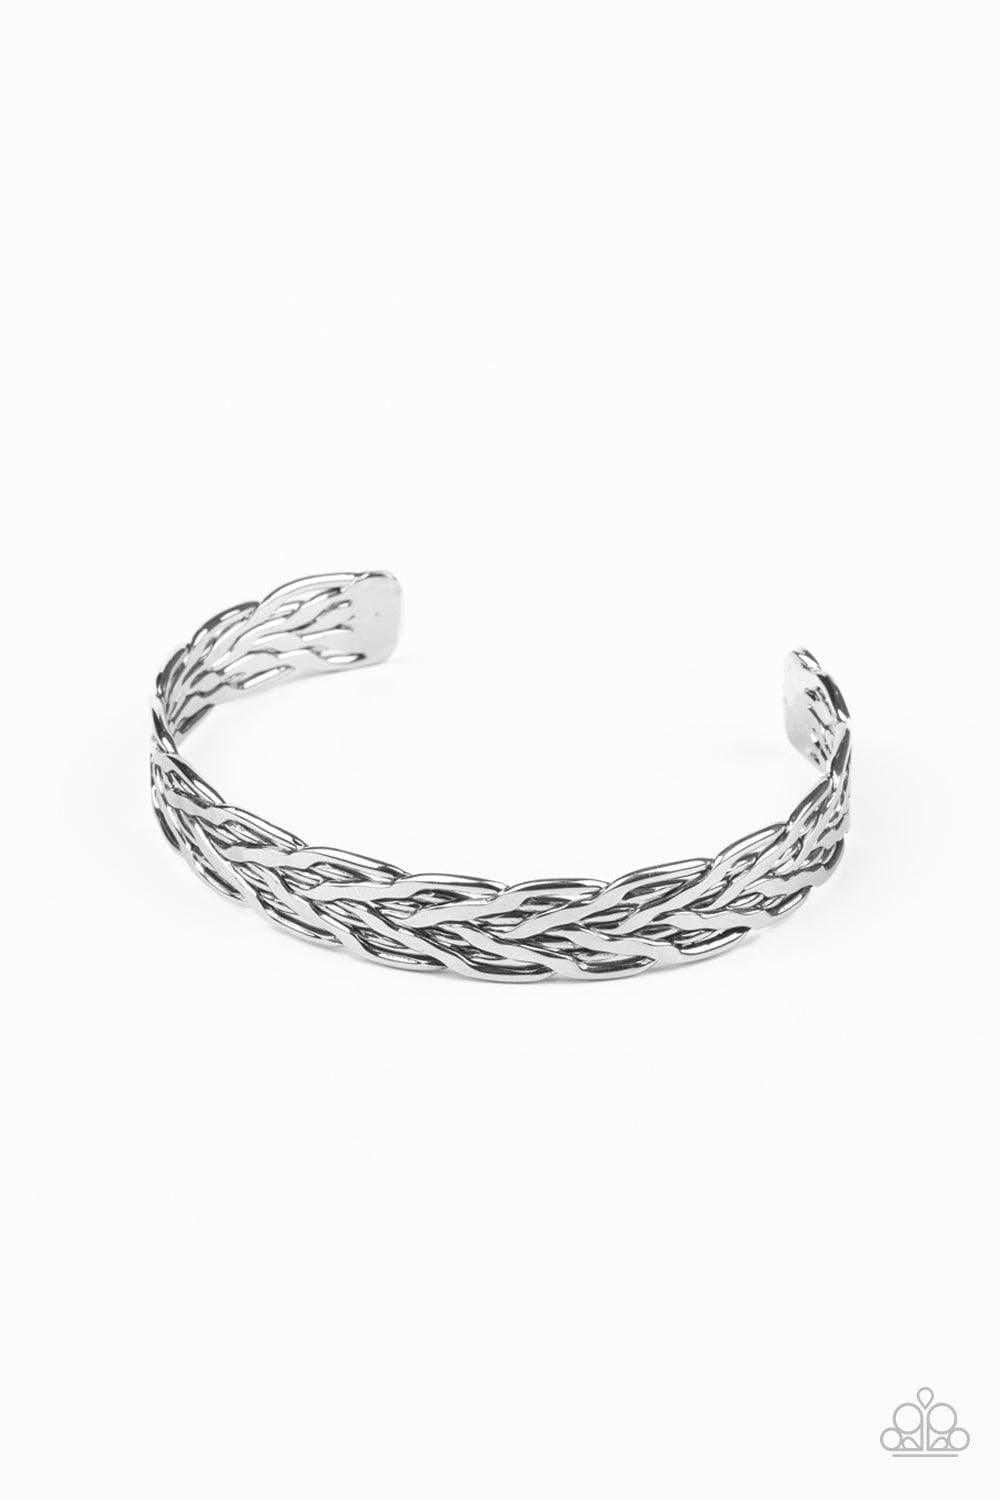 Paparazzi Accessories - Magnetic Maven - Silver Men's Bracelet - Bling by JessieK